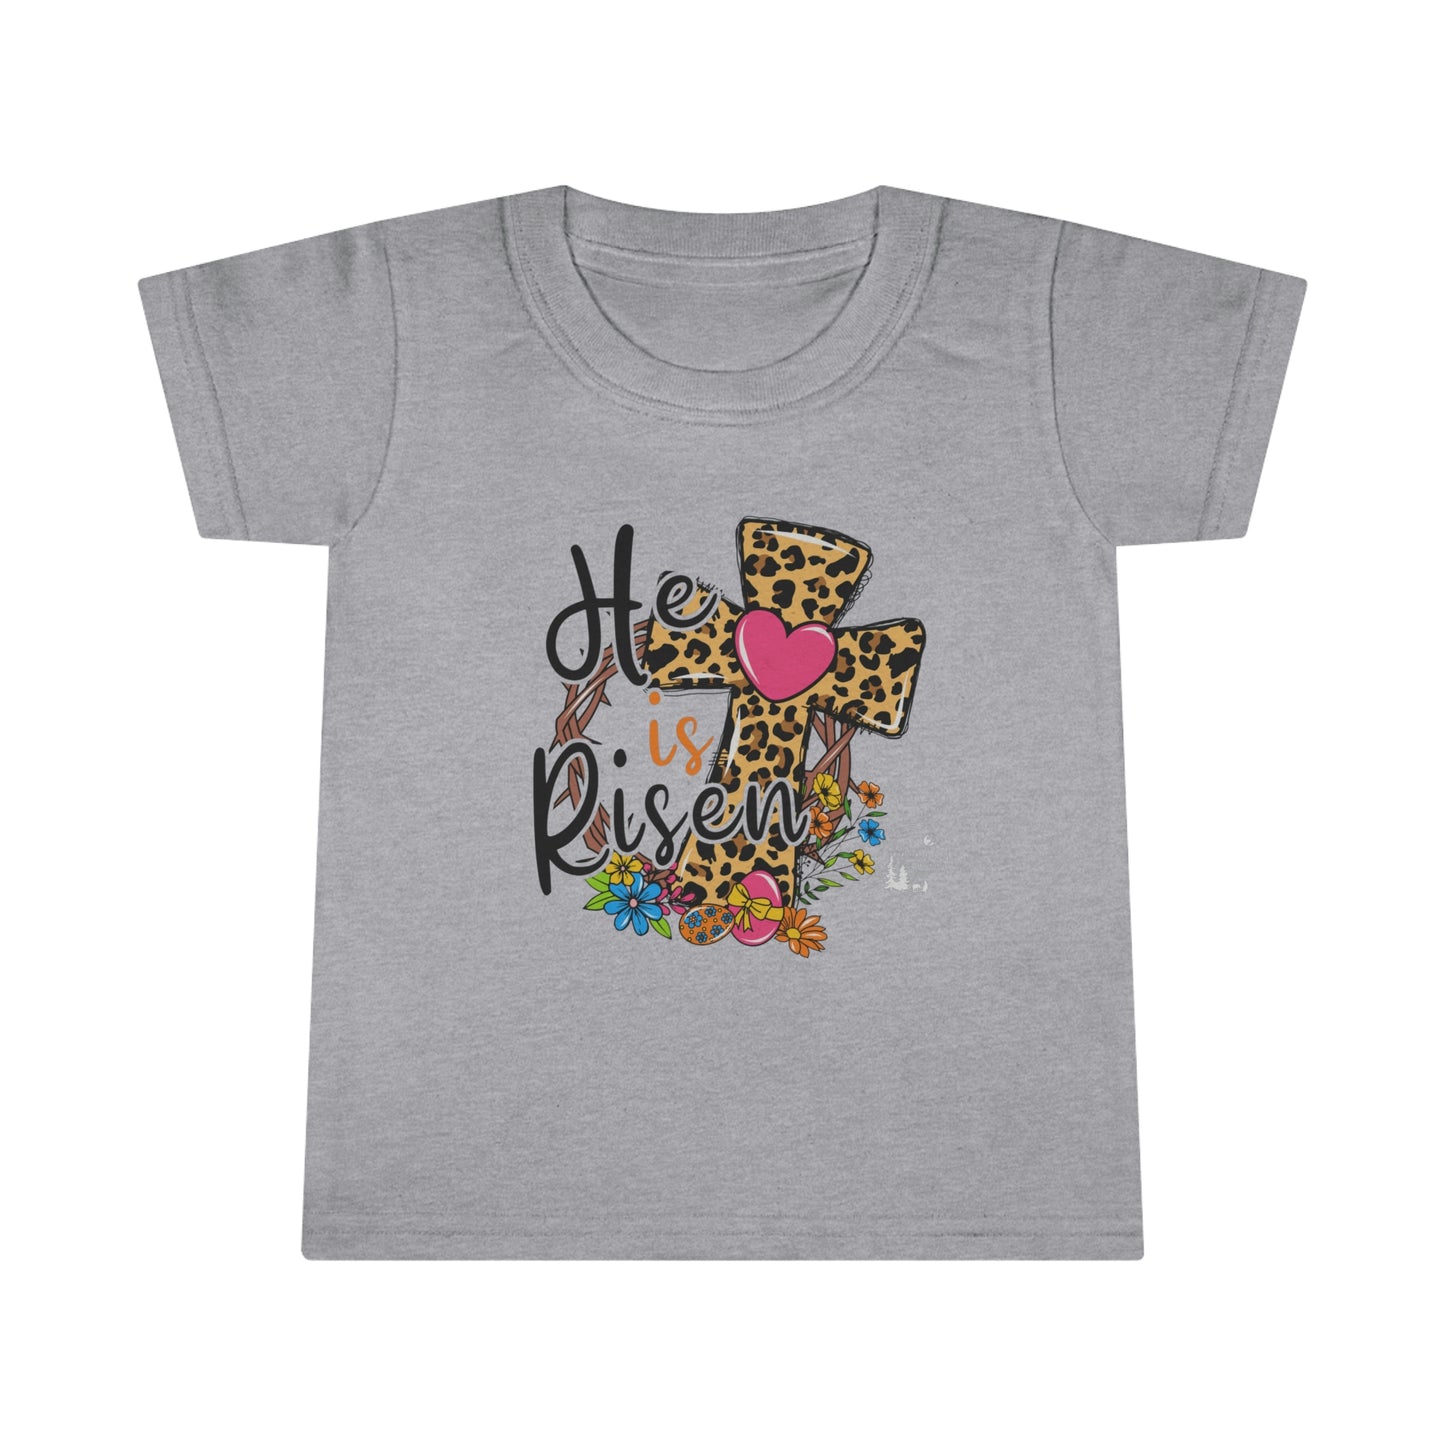 He Is Risen Easter Leopard Print Cross Toddler T-shirt